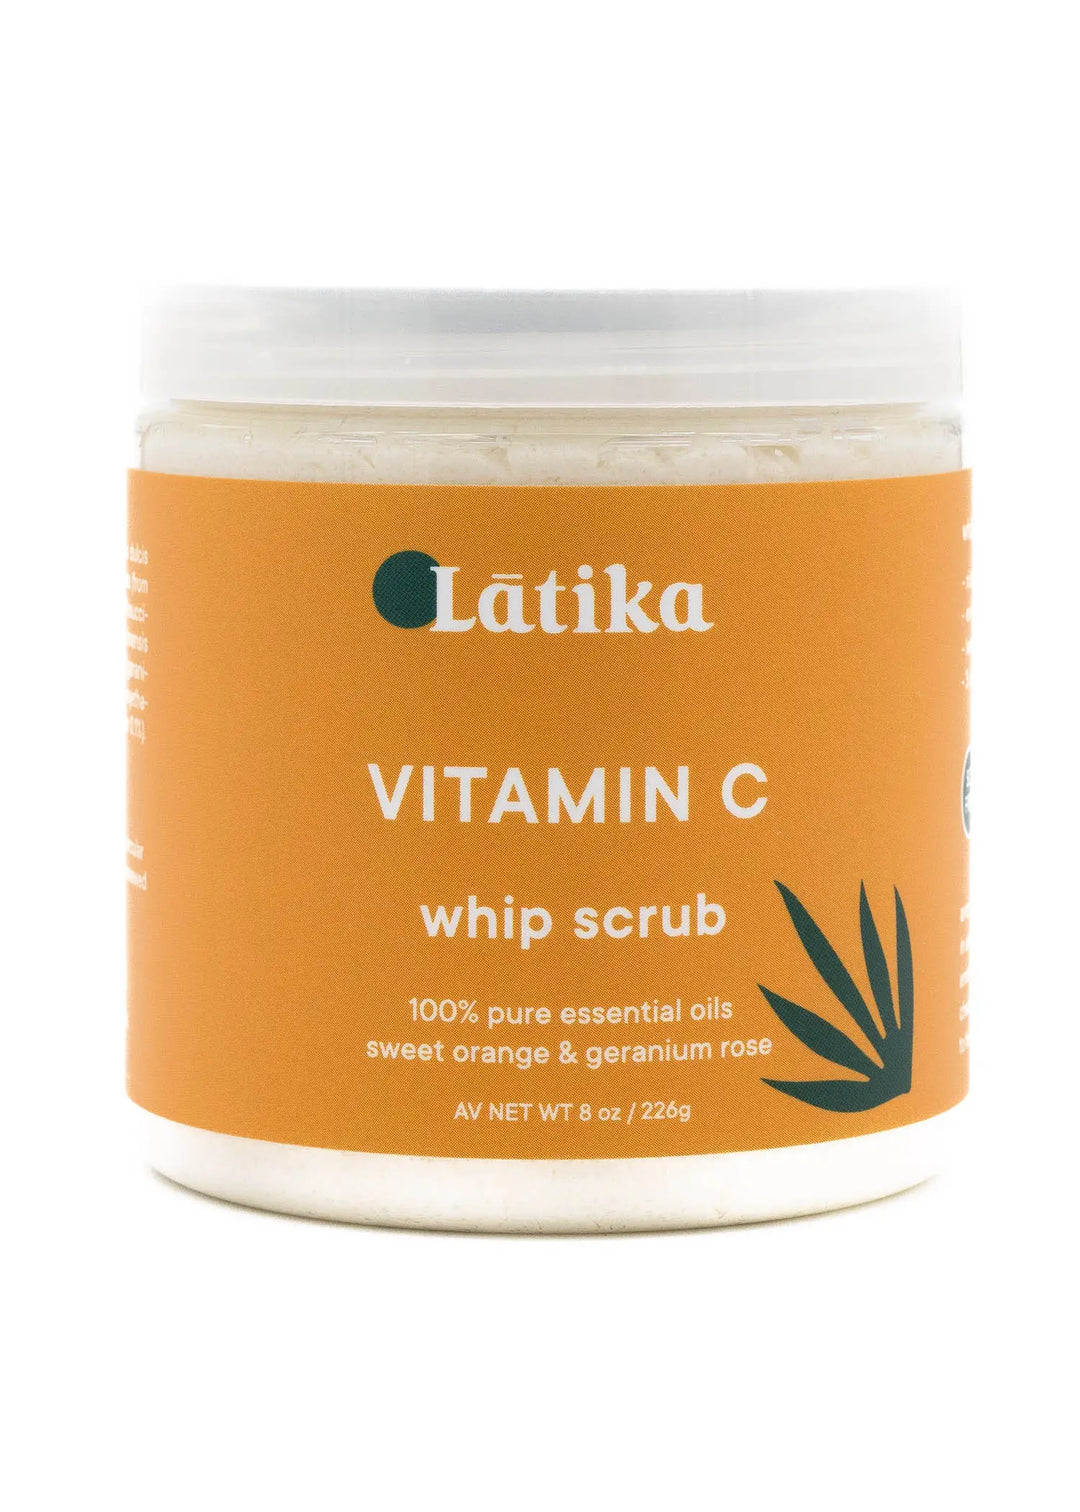 Whip Scrub - Vitamin C